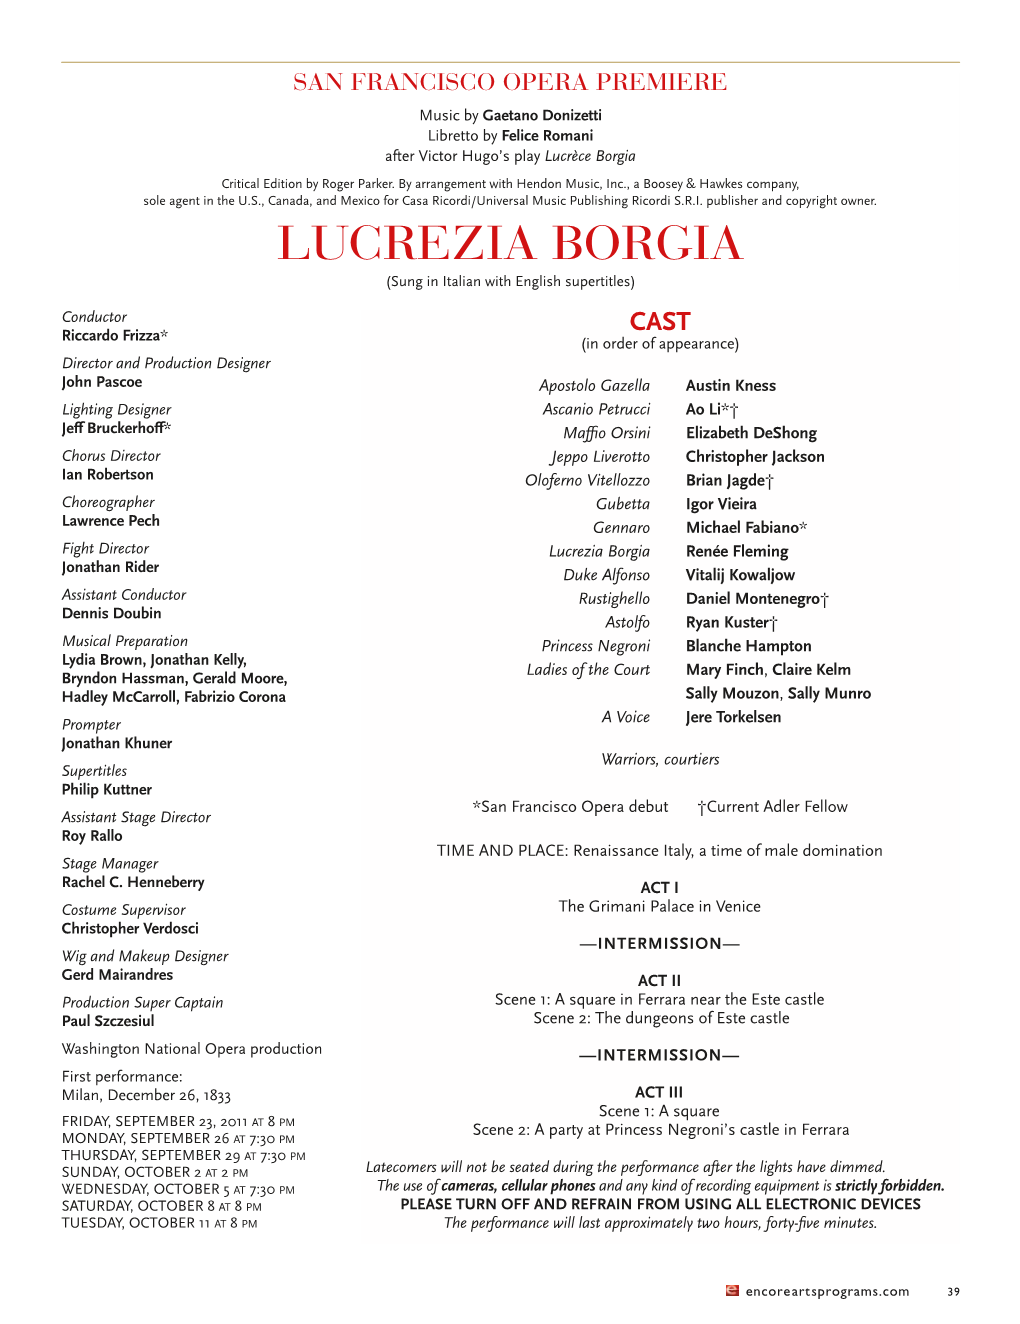 LUCREZIA BORGIA (Sung in Italian with English Supertitles)